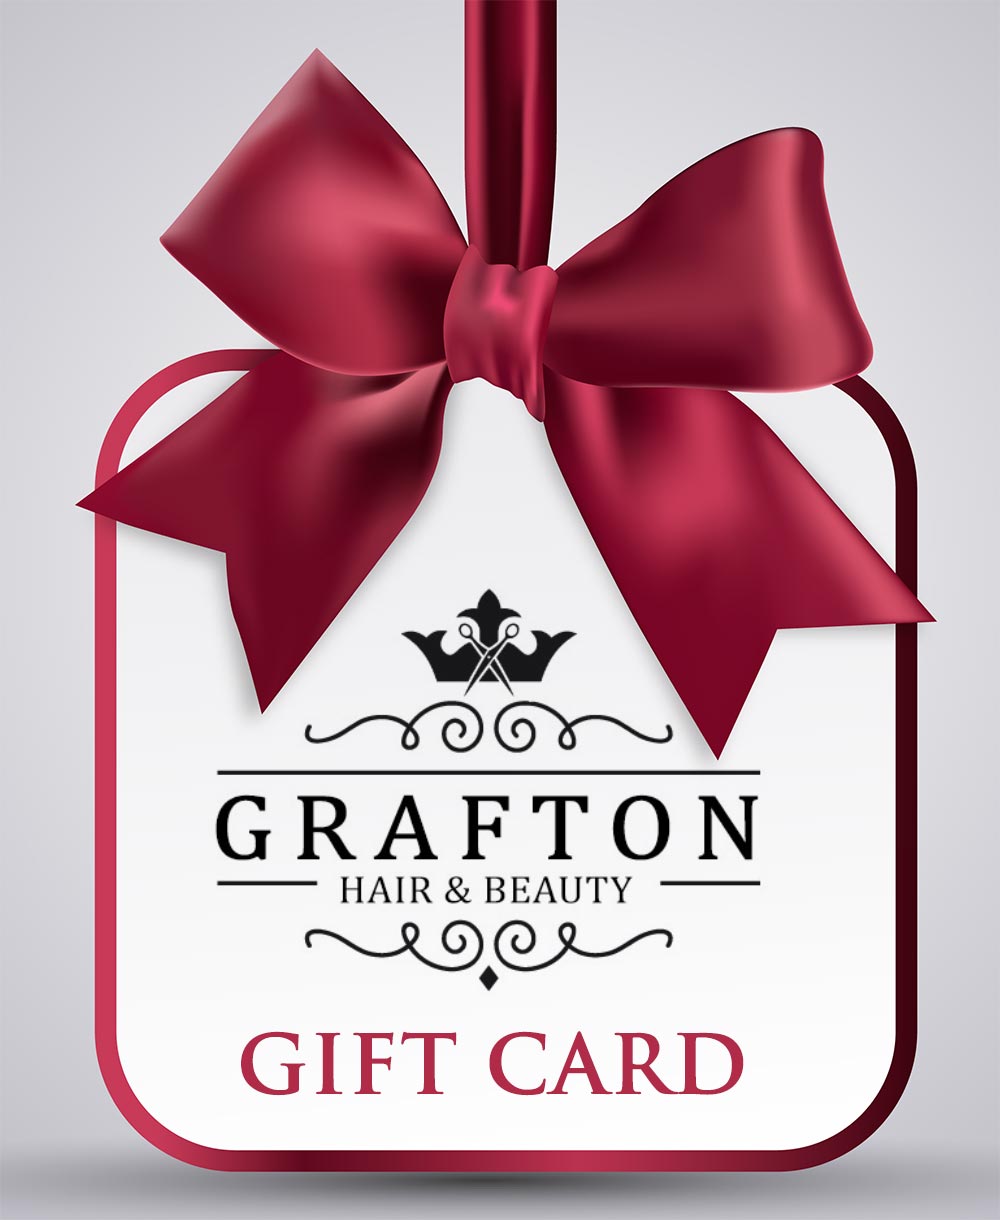 Grafton Hair & Beauty Gift Card